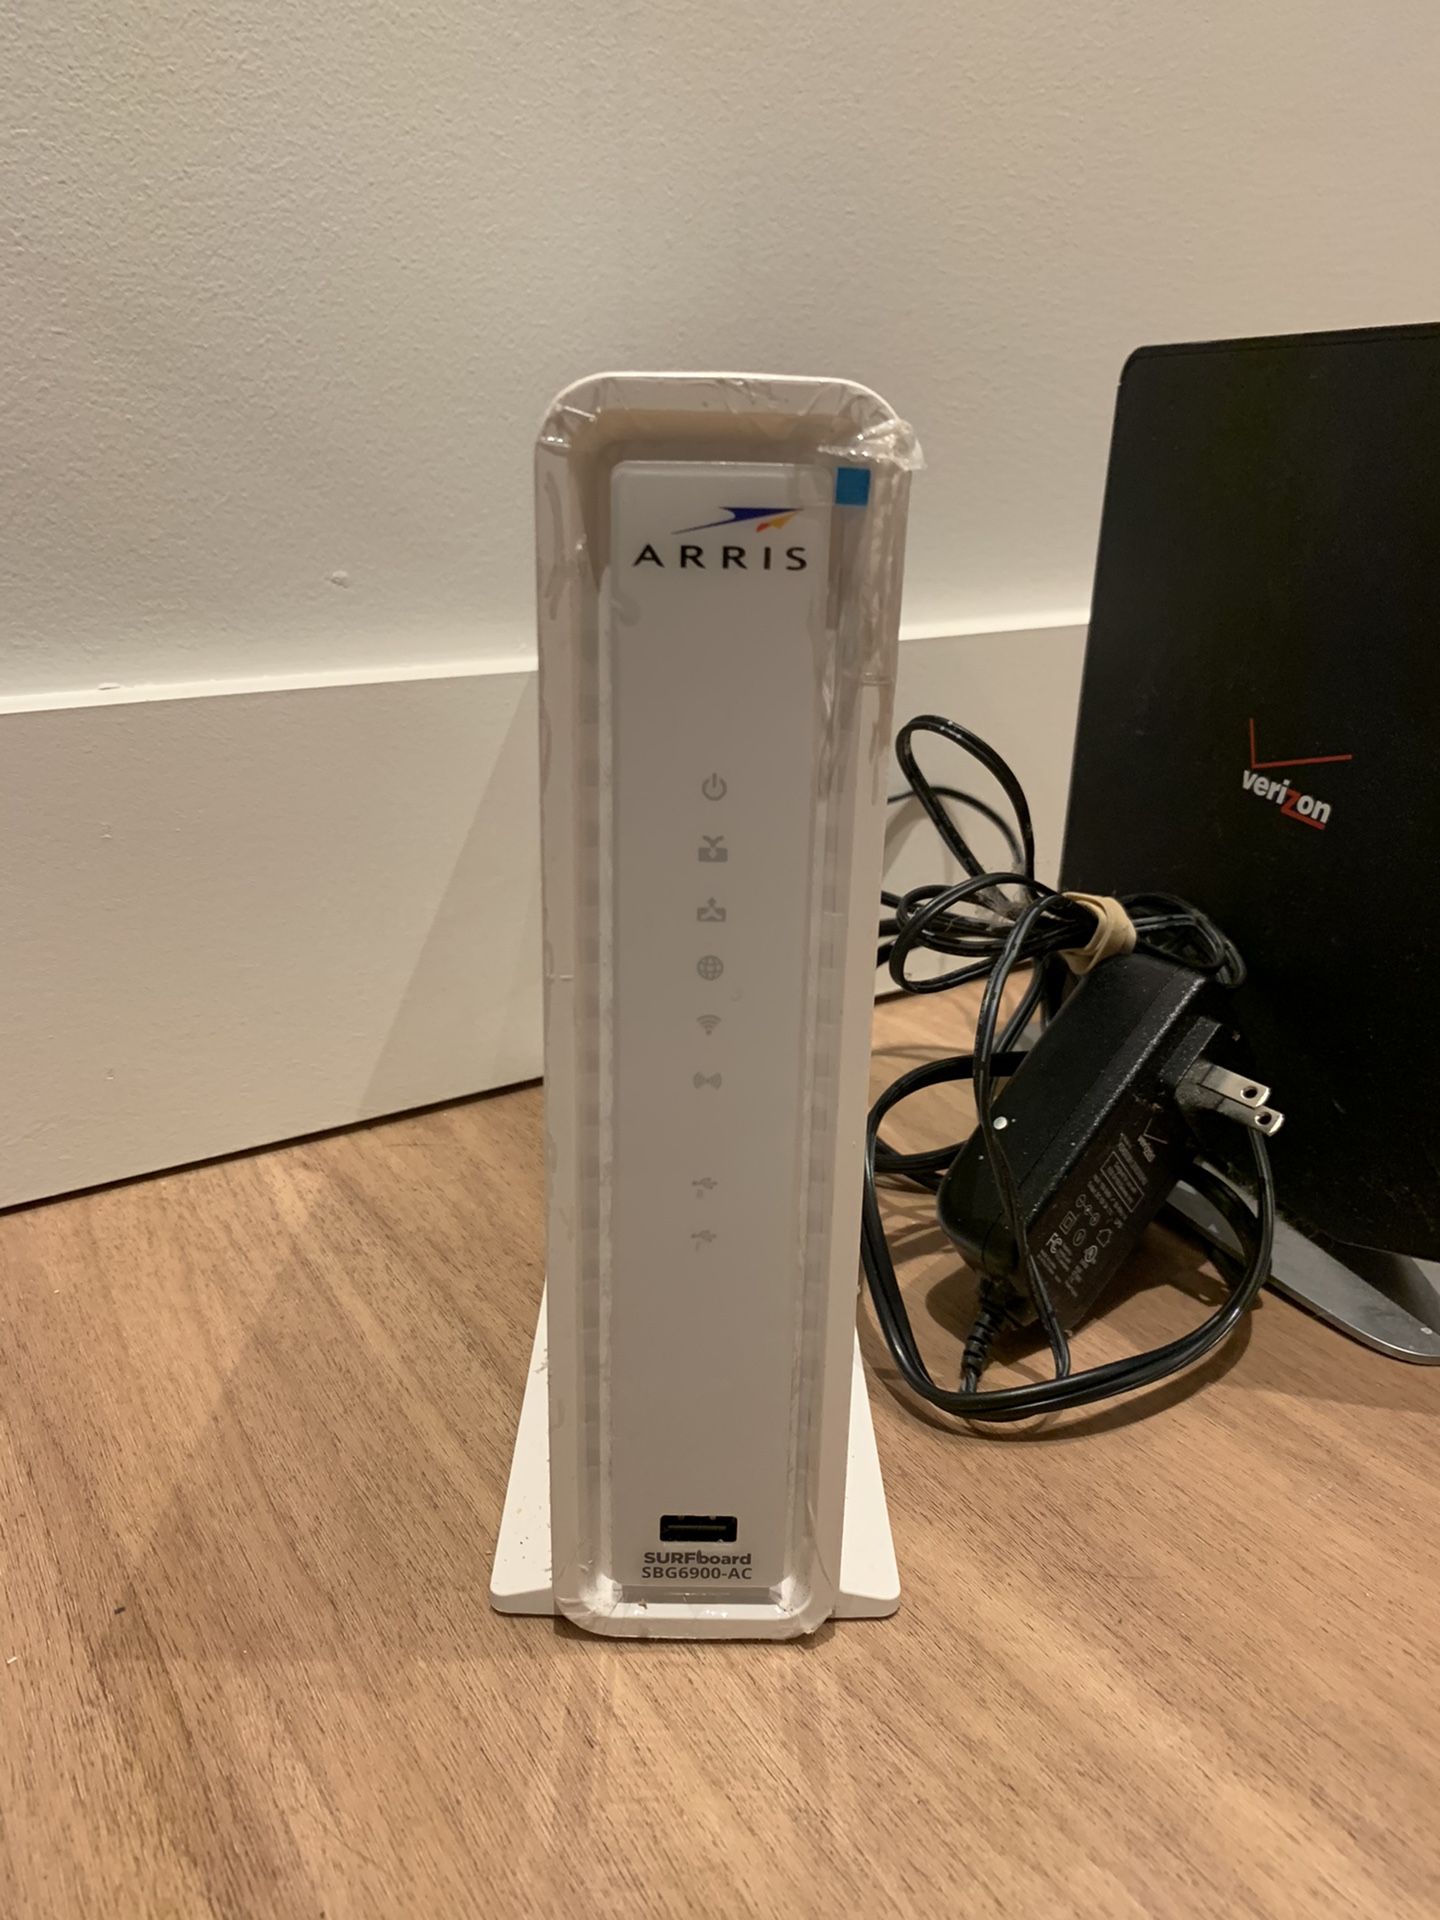 ARRIS modem router combo - new